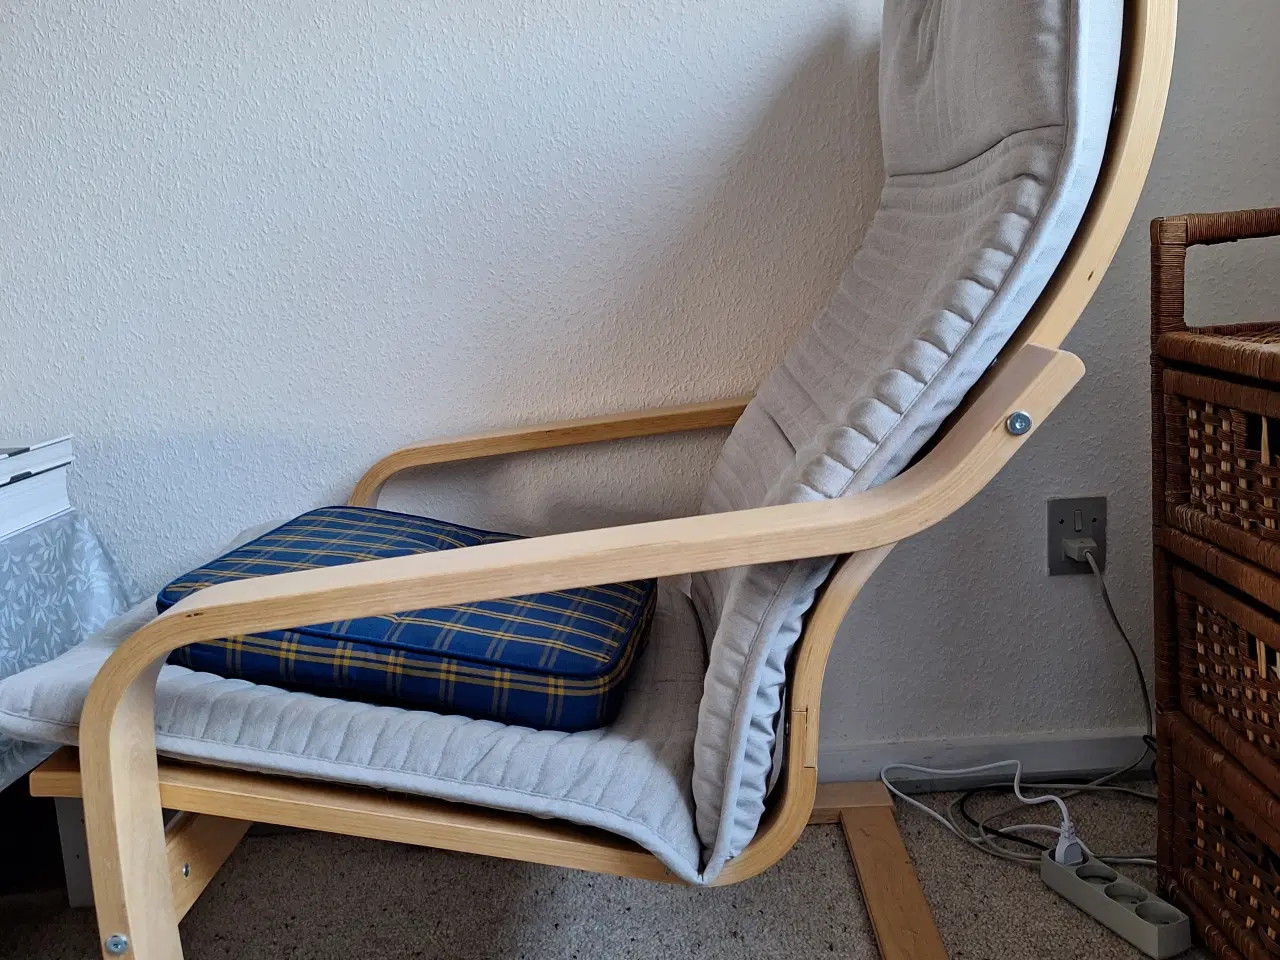 Billede 1 - 2 stole fra Ikea 